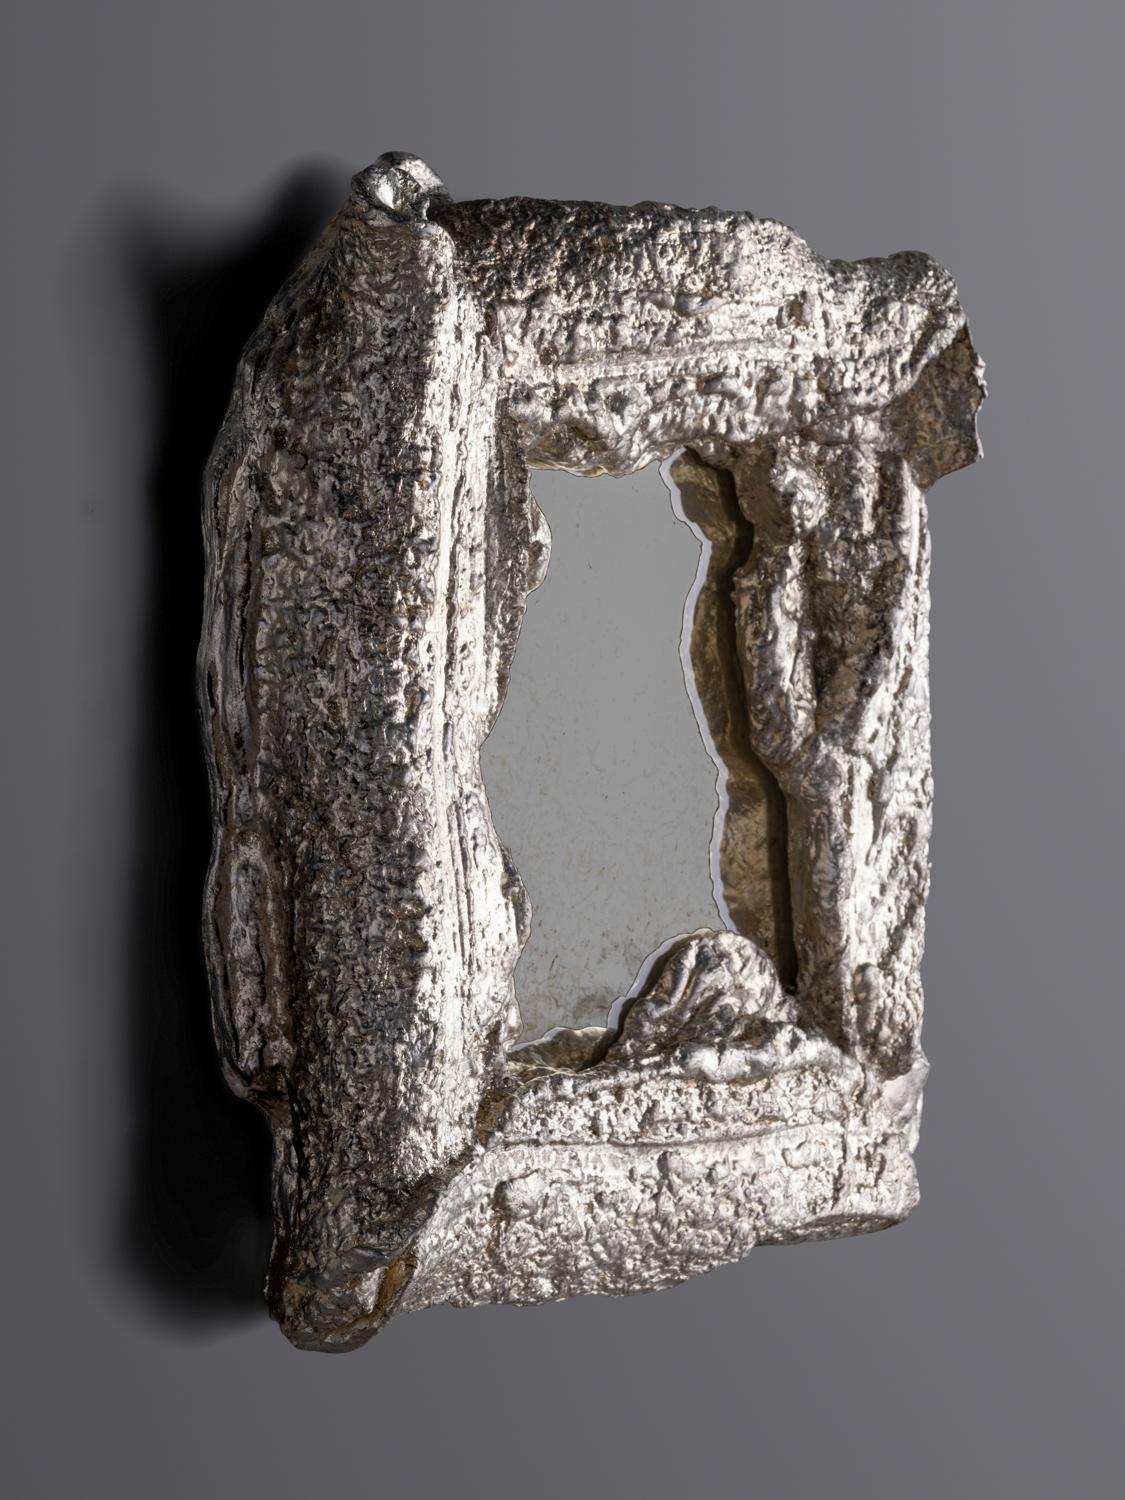 Yolande Milan Batteau (b. 1970)
USA, 2022

Moon gold leaf on cast plaster with antiqued mirror plate, black wax.